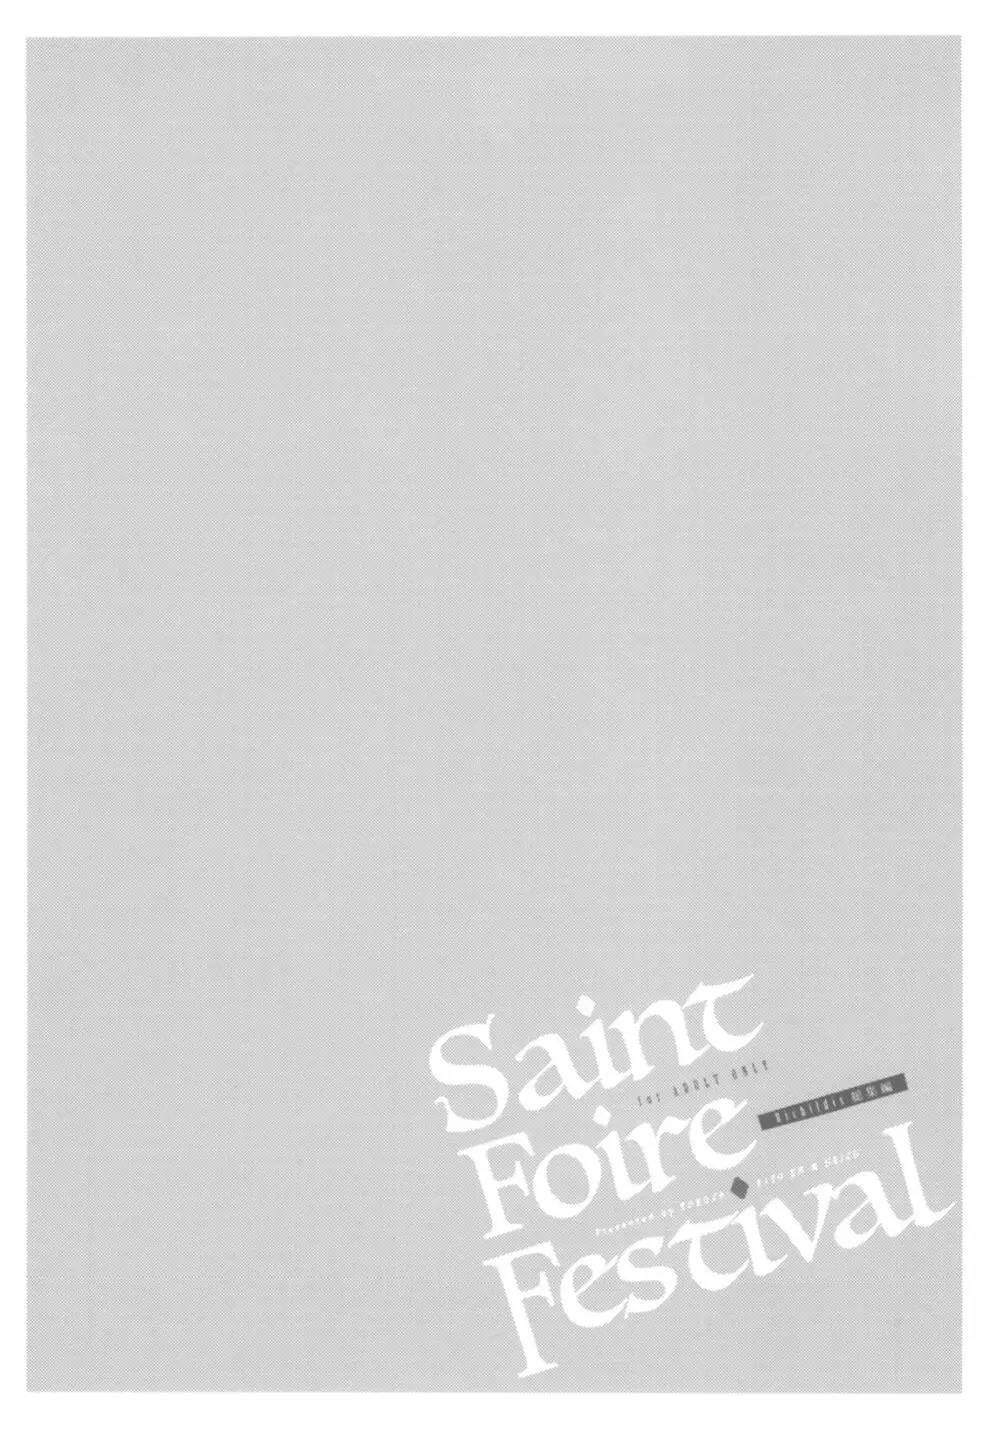 Saint Foire Festival Richildis総集編 64ページ